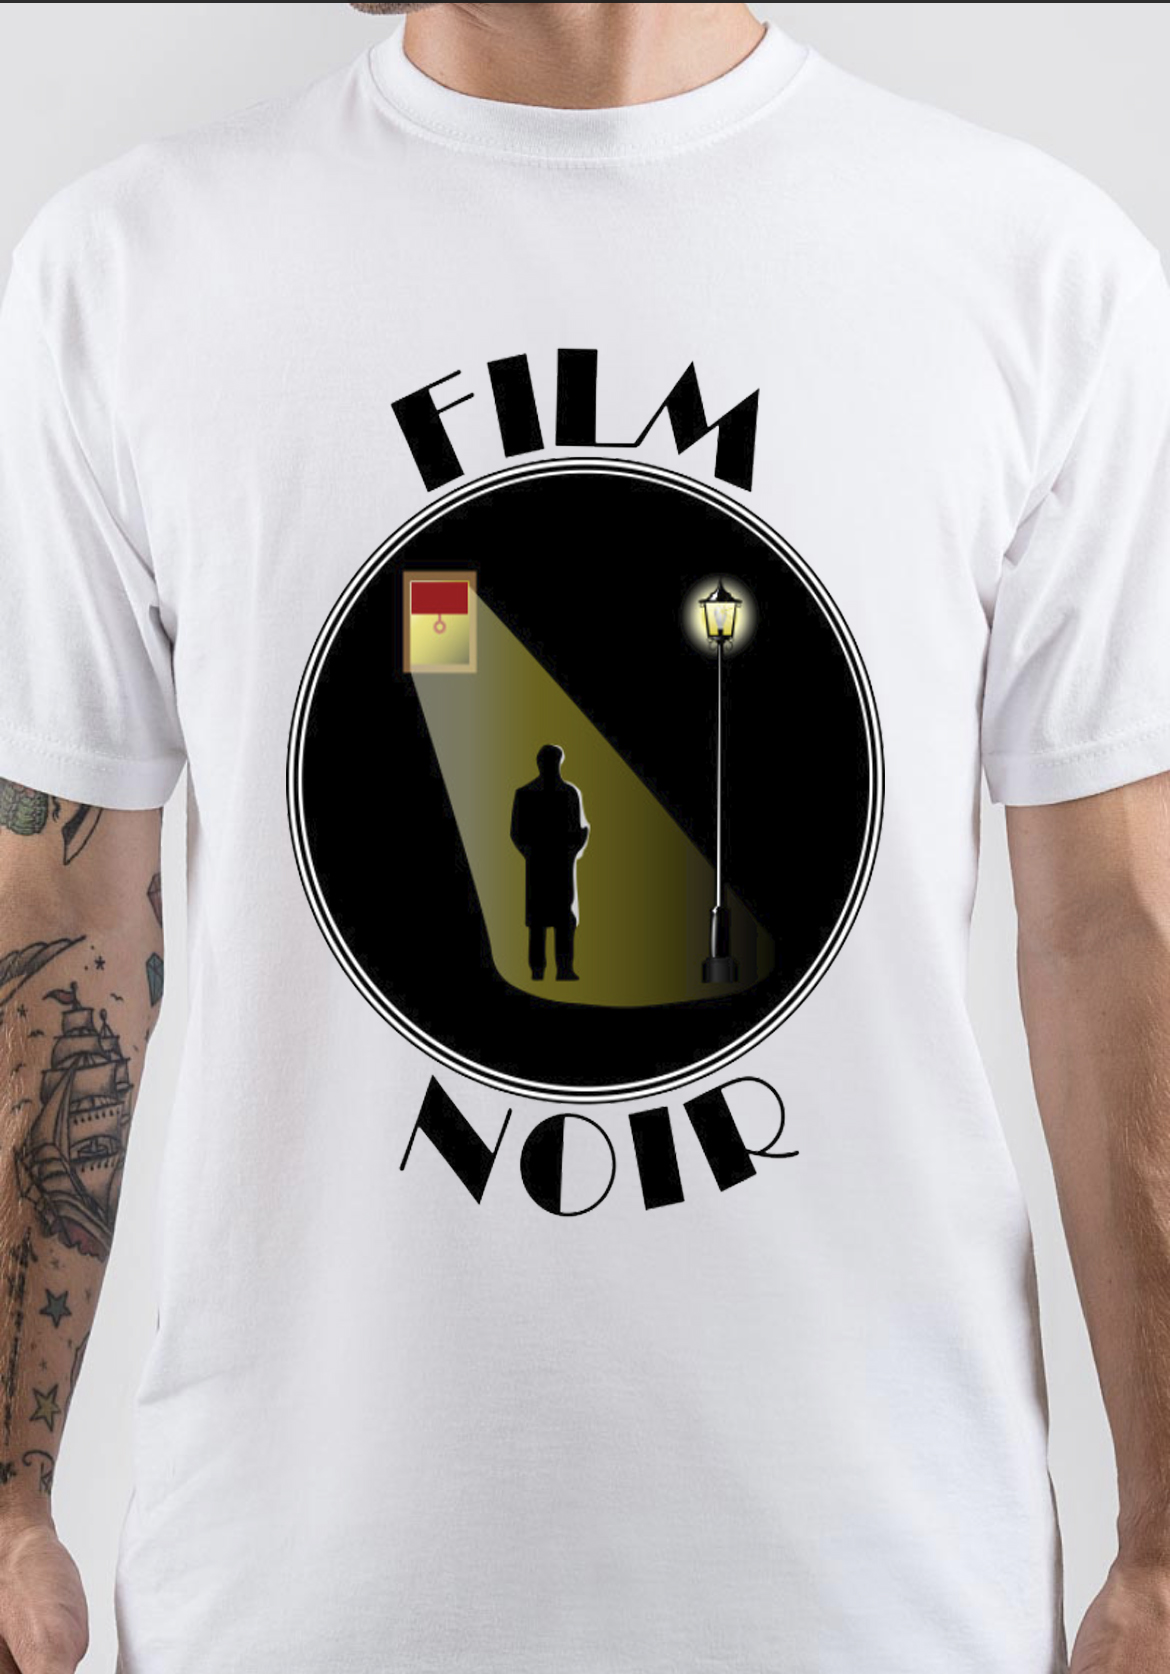 Film Noir T-Shirt And Merchandise